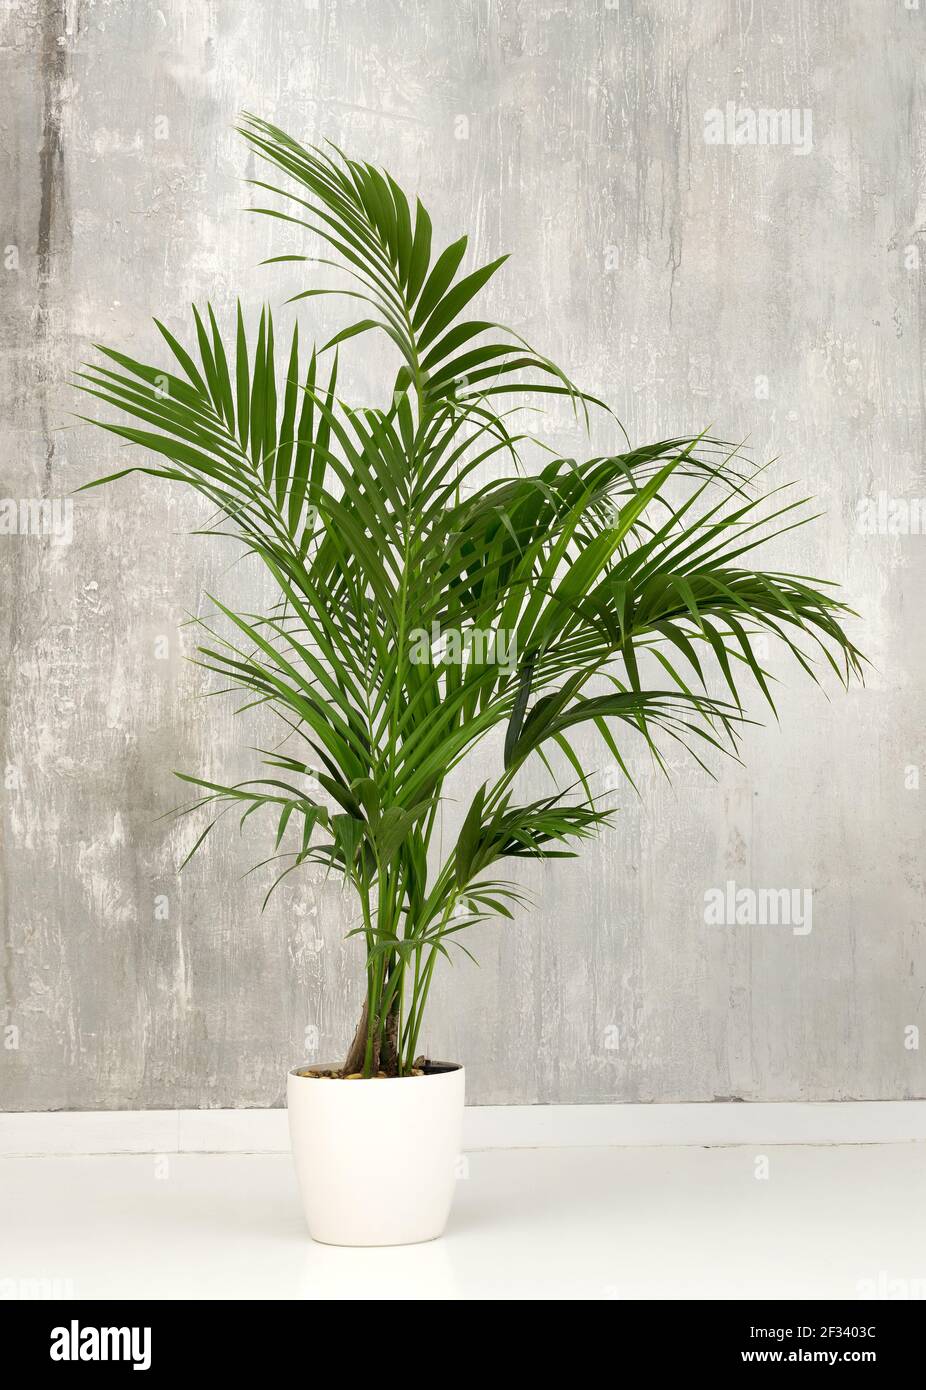 Planta de palma en maceta fotografías e imágenes de alta resolución - Alamy